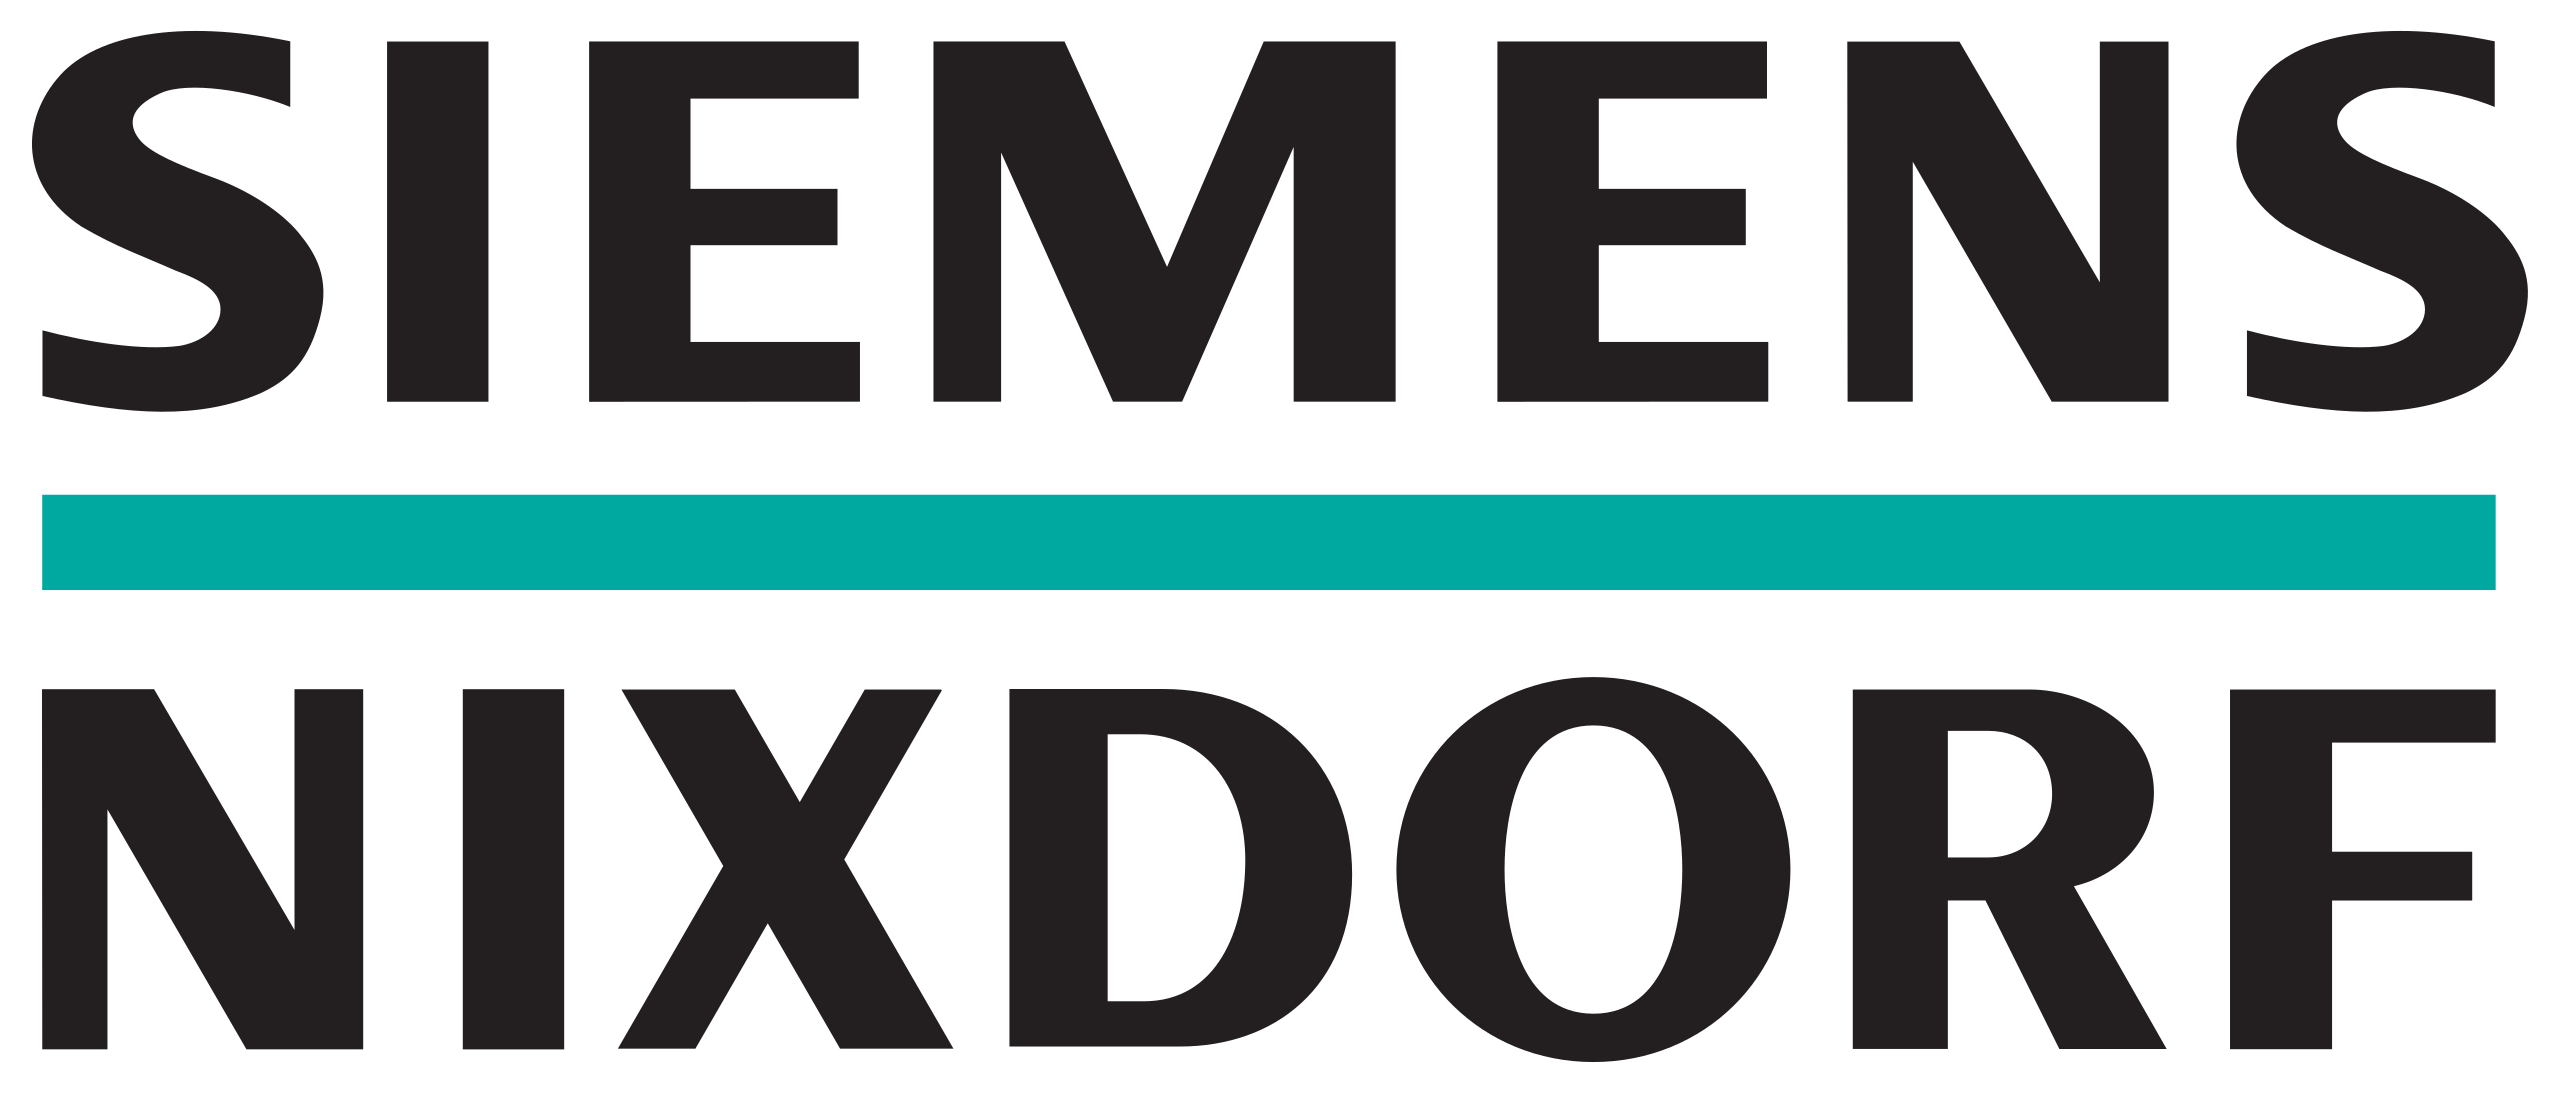 2560px-Siemens_Nixdorf_logo.svg.png